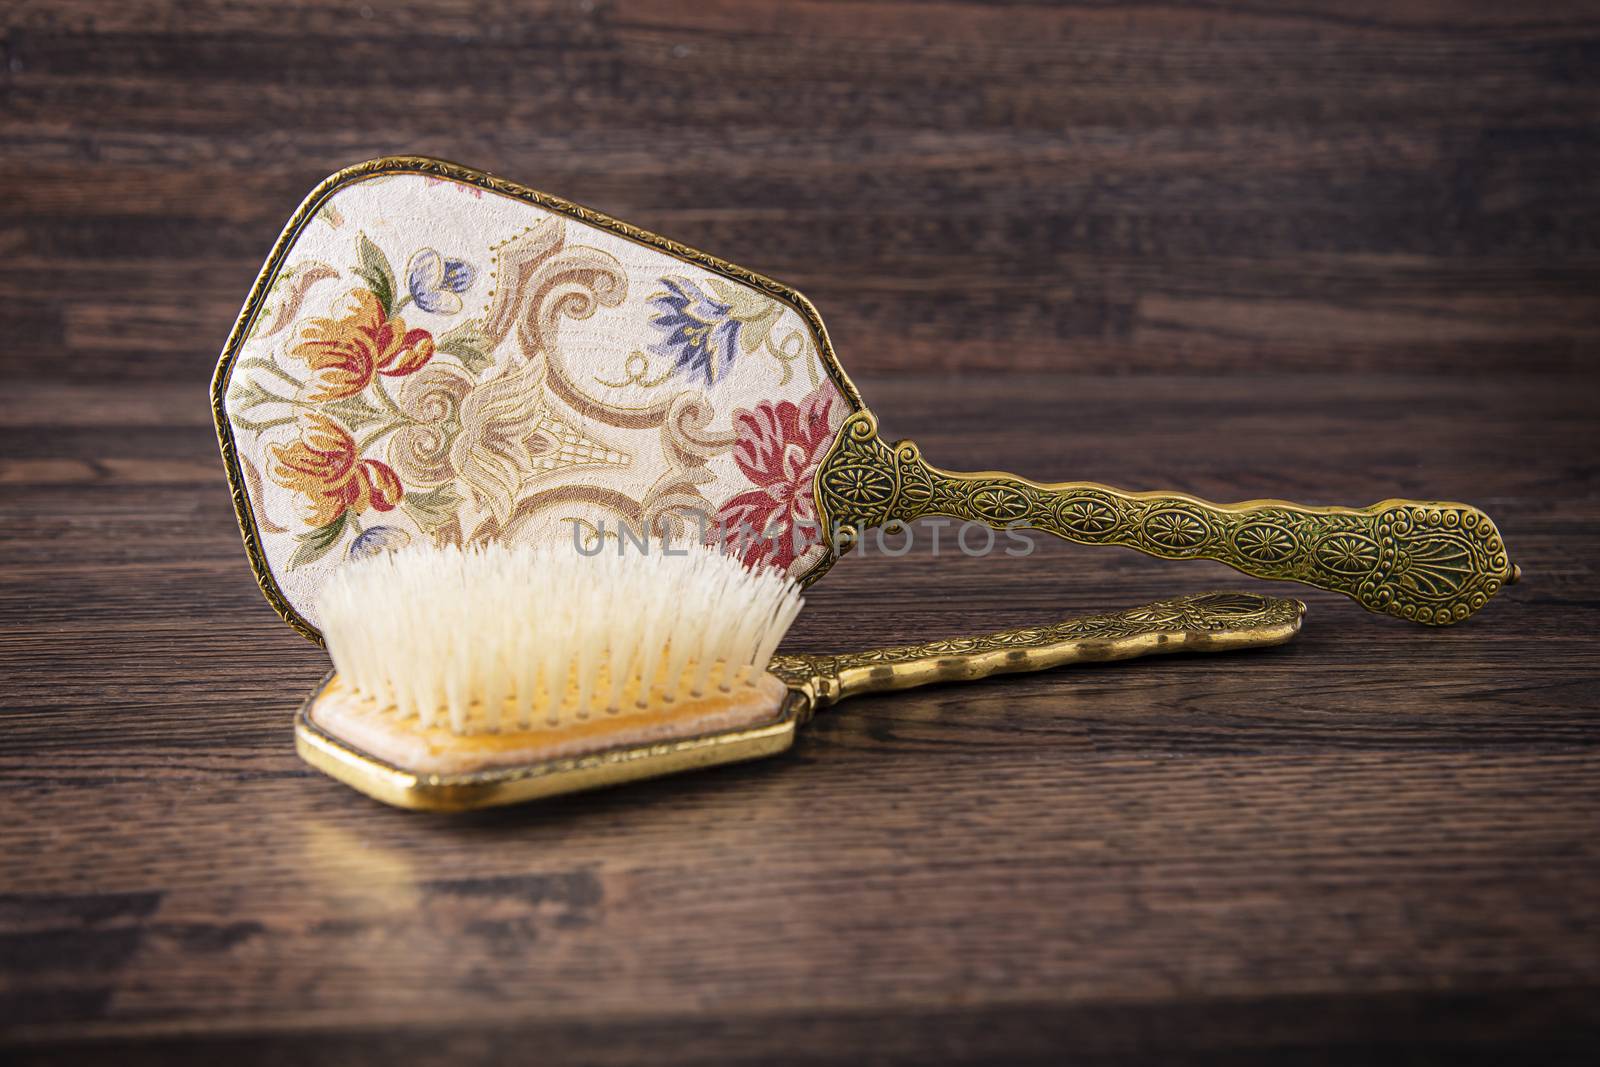 decorative hair brush and hand mirror by mypstudio